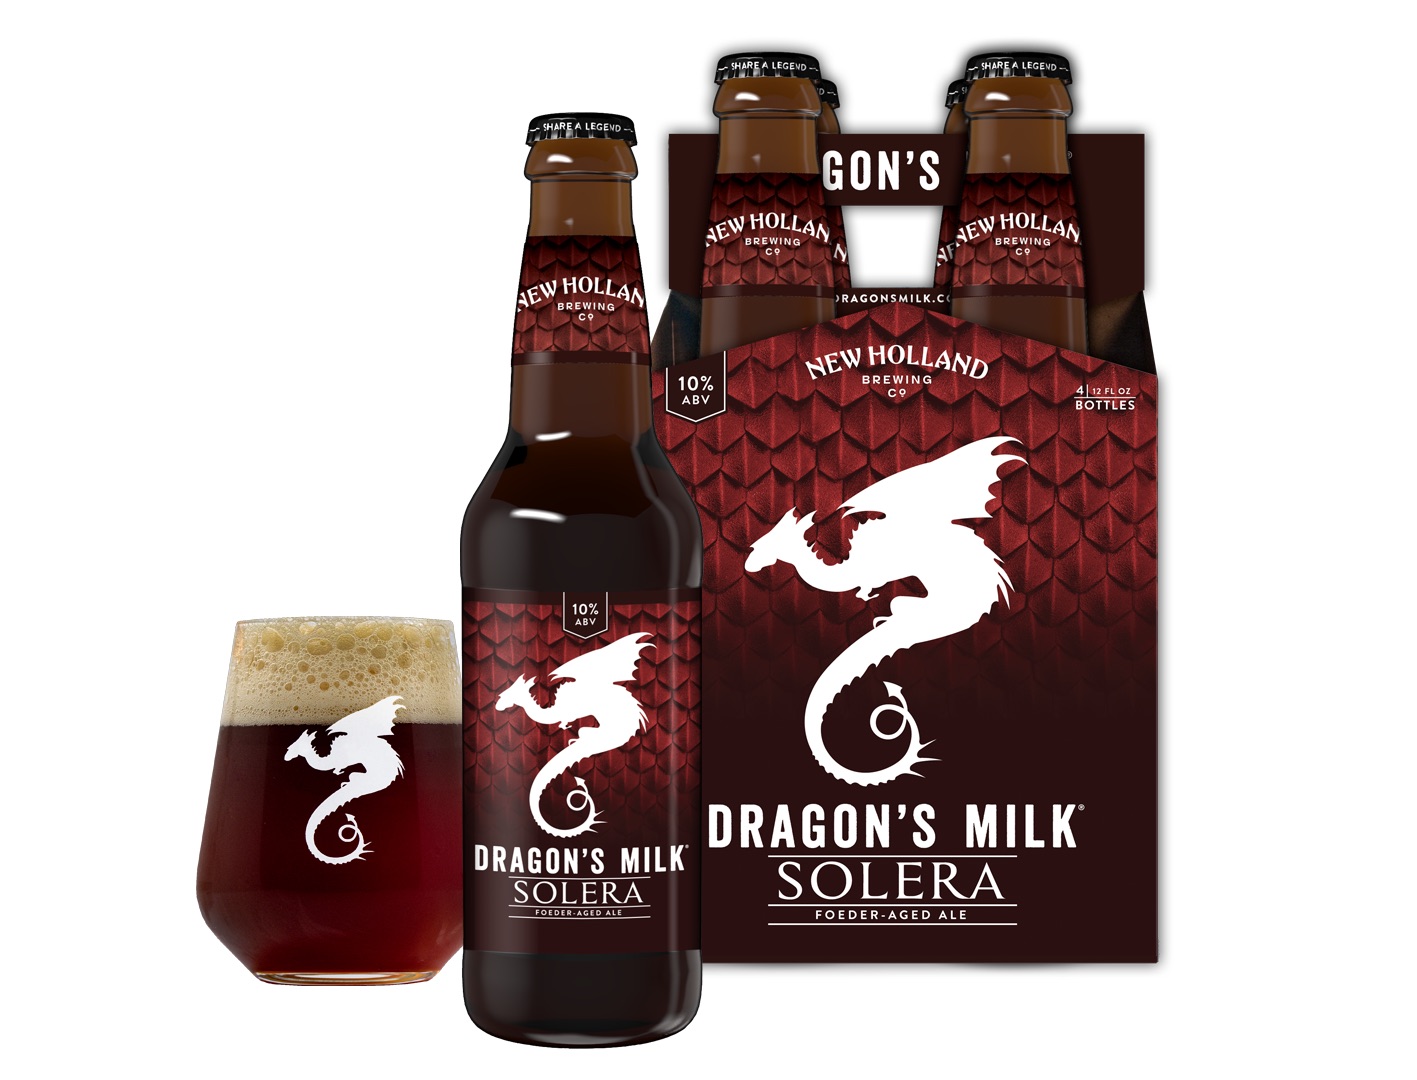 New Holland Dragon's Milk Solera